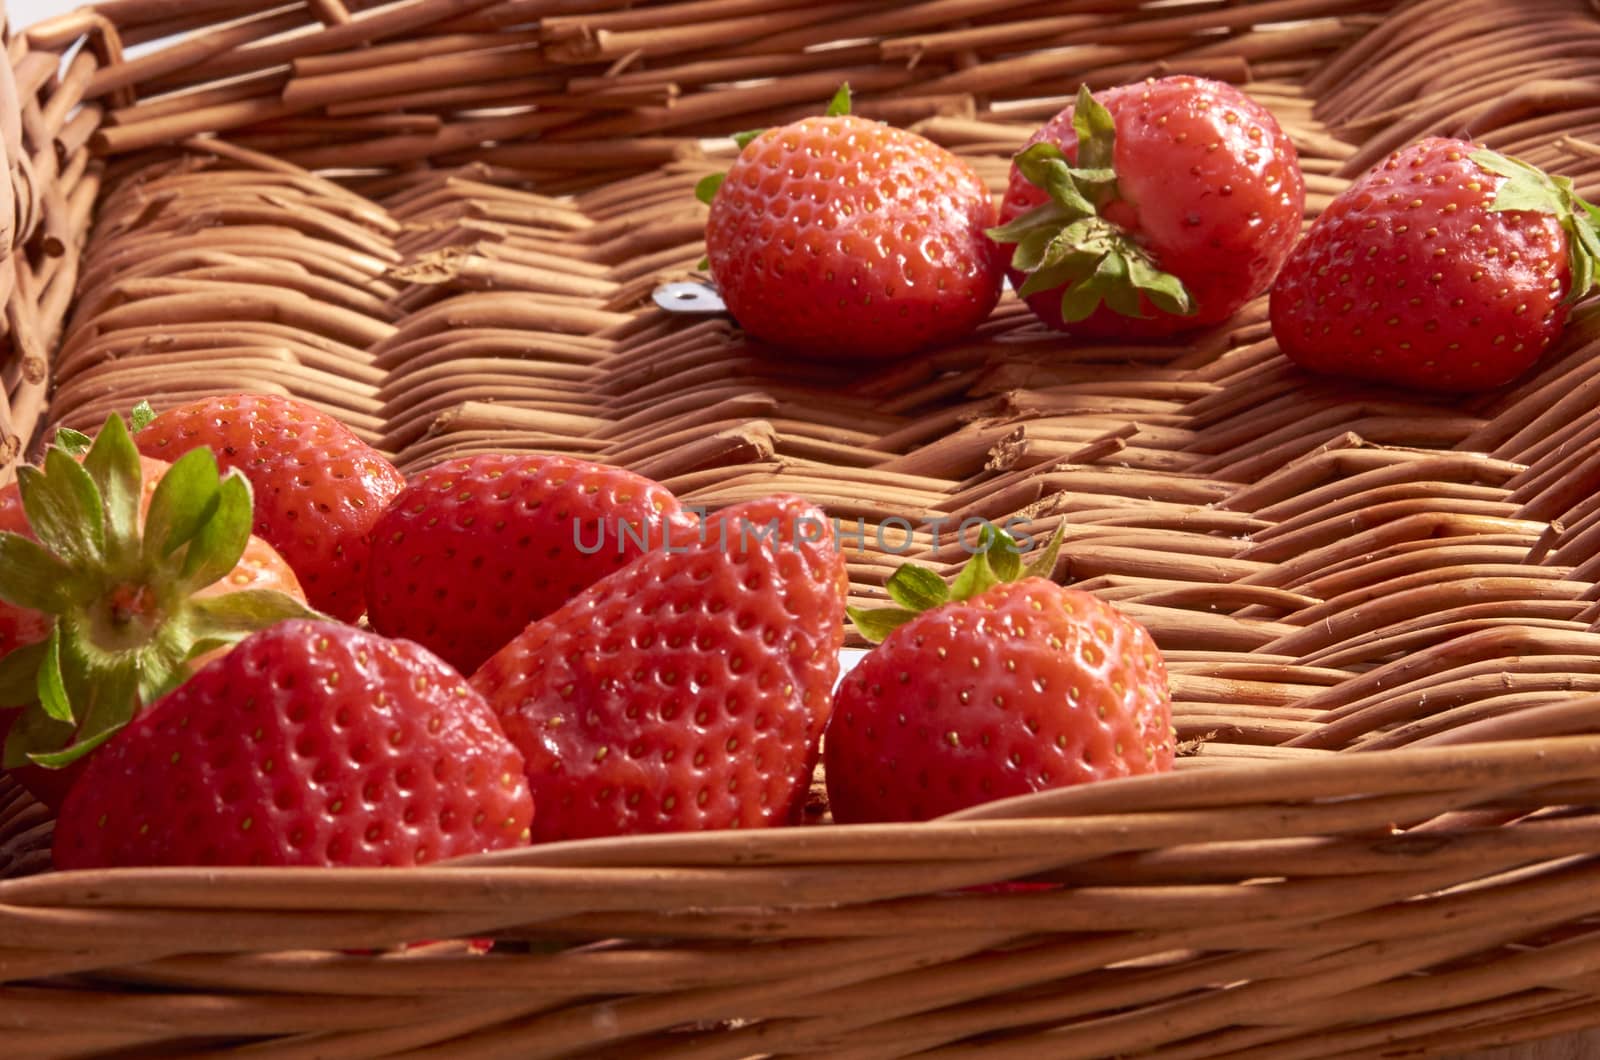 Strawberries in a cane basket by bpardofotografia